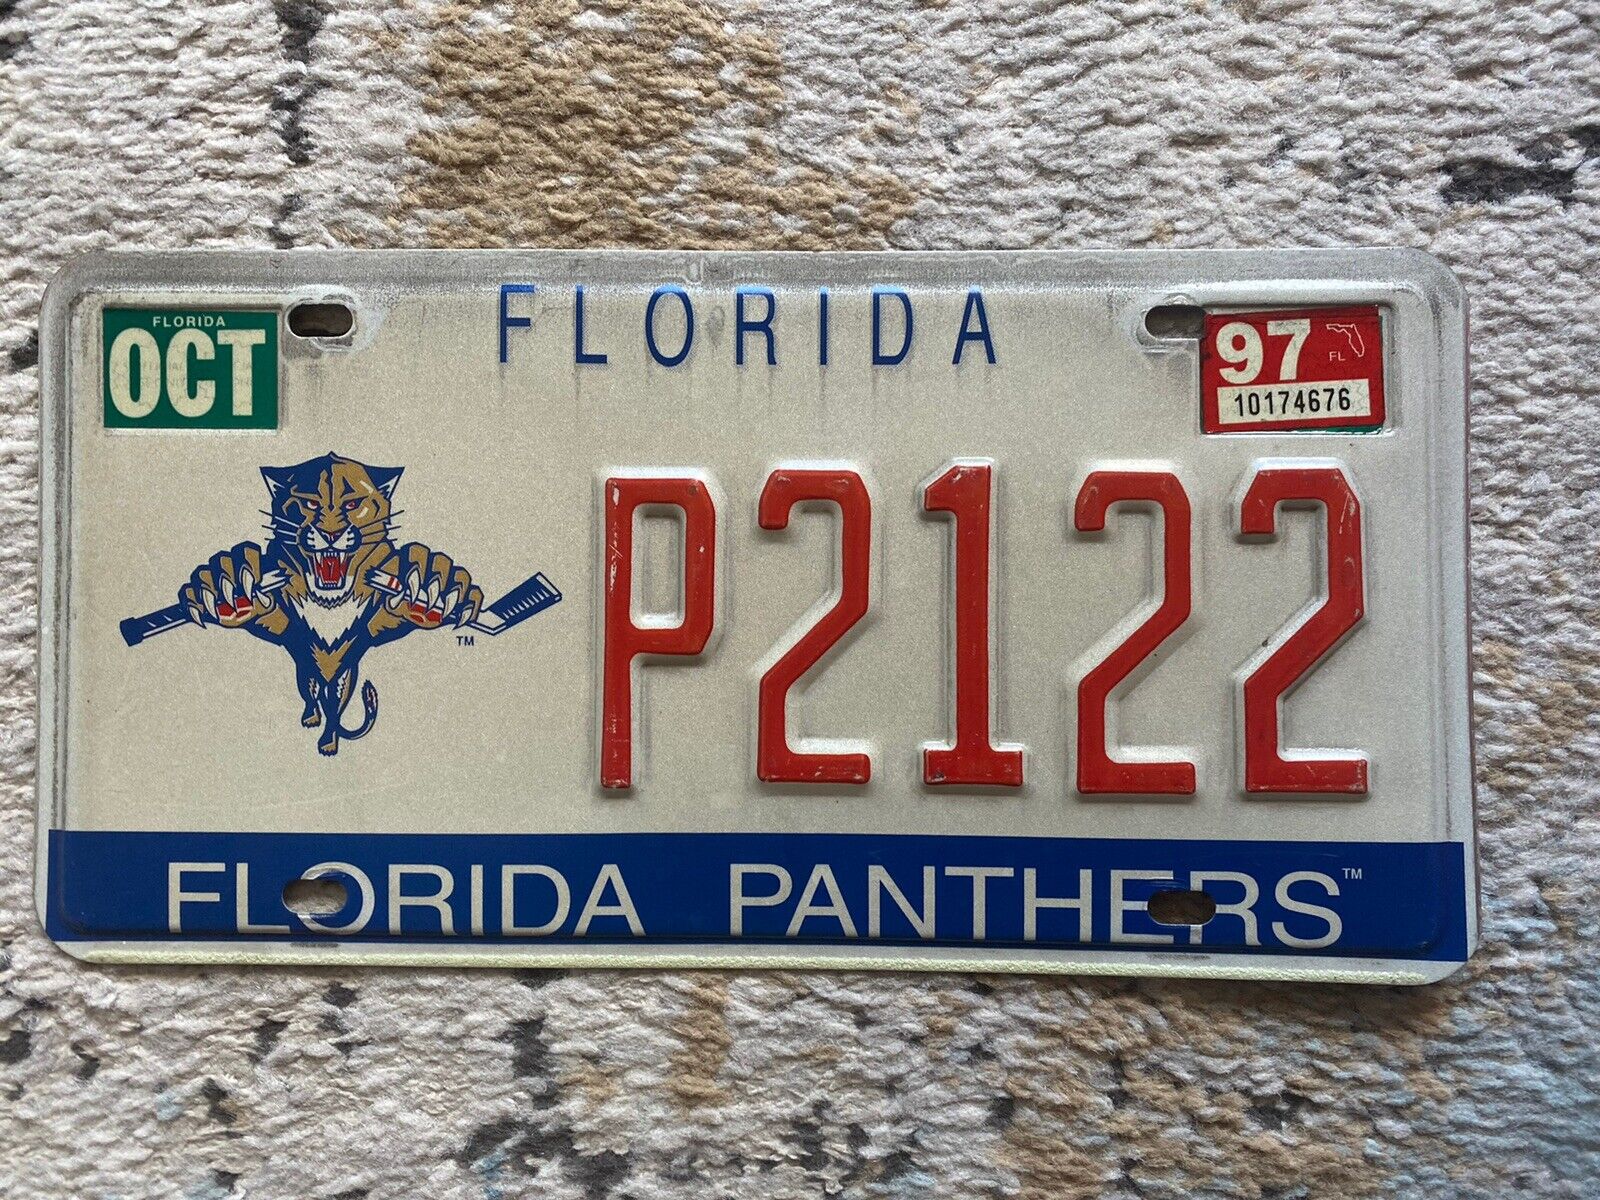 NHL World Champs Florida Panthers License Plate P2122, Original Design, Vintage